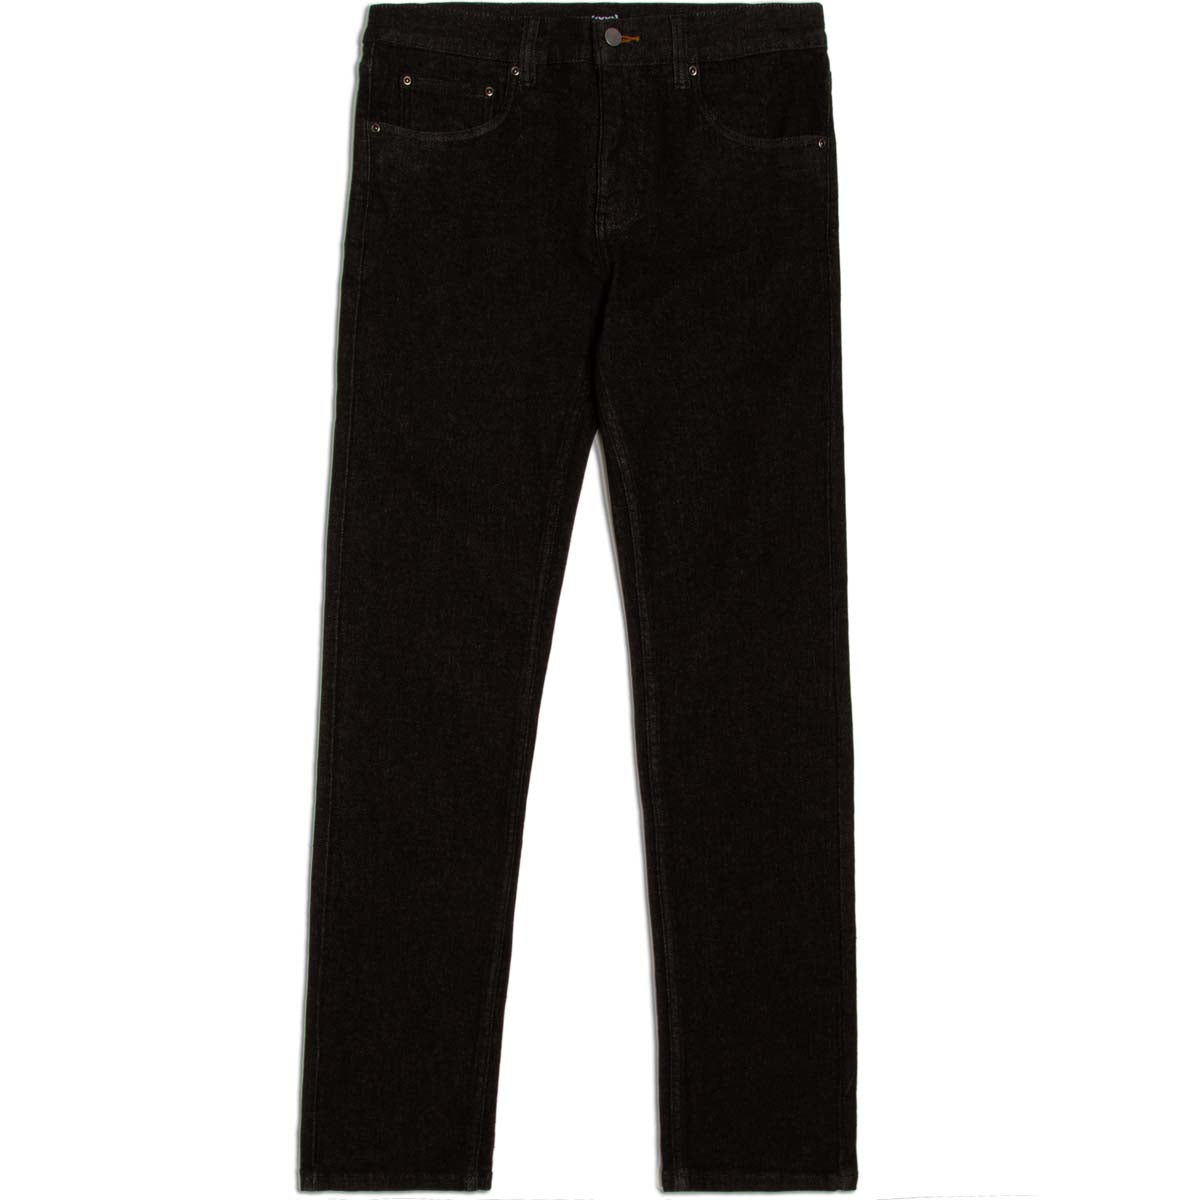 CCS 12oz Stretch Skinny Denim Jeans - 12oz Black image 1